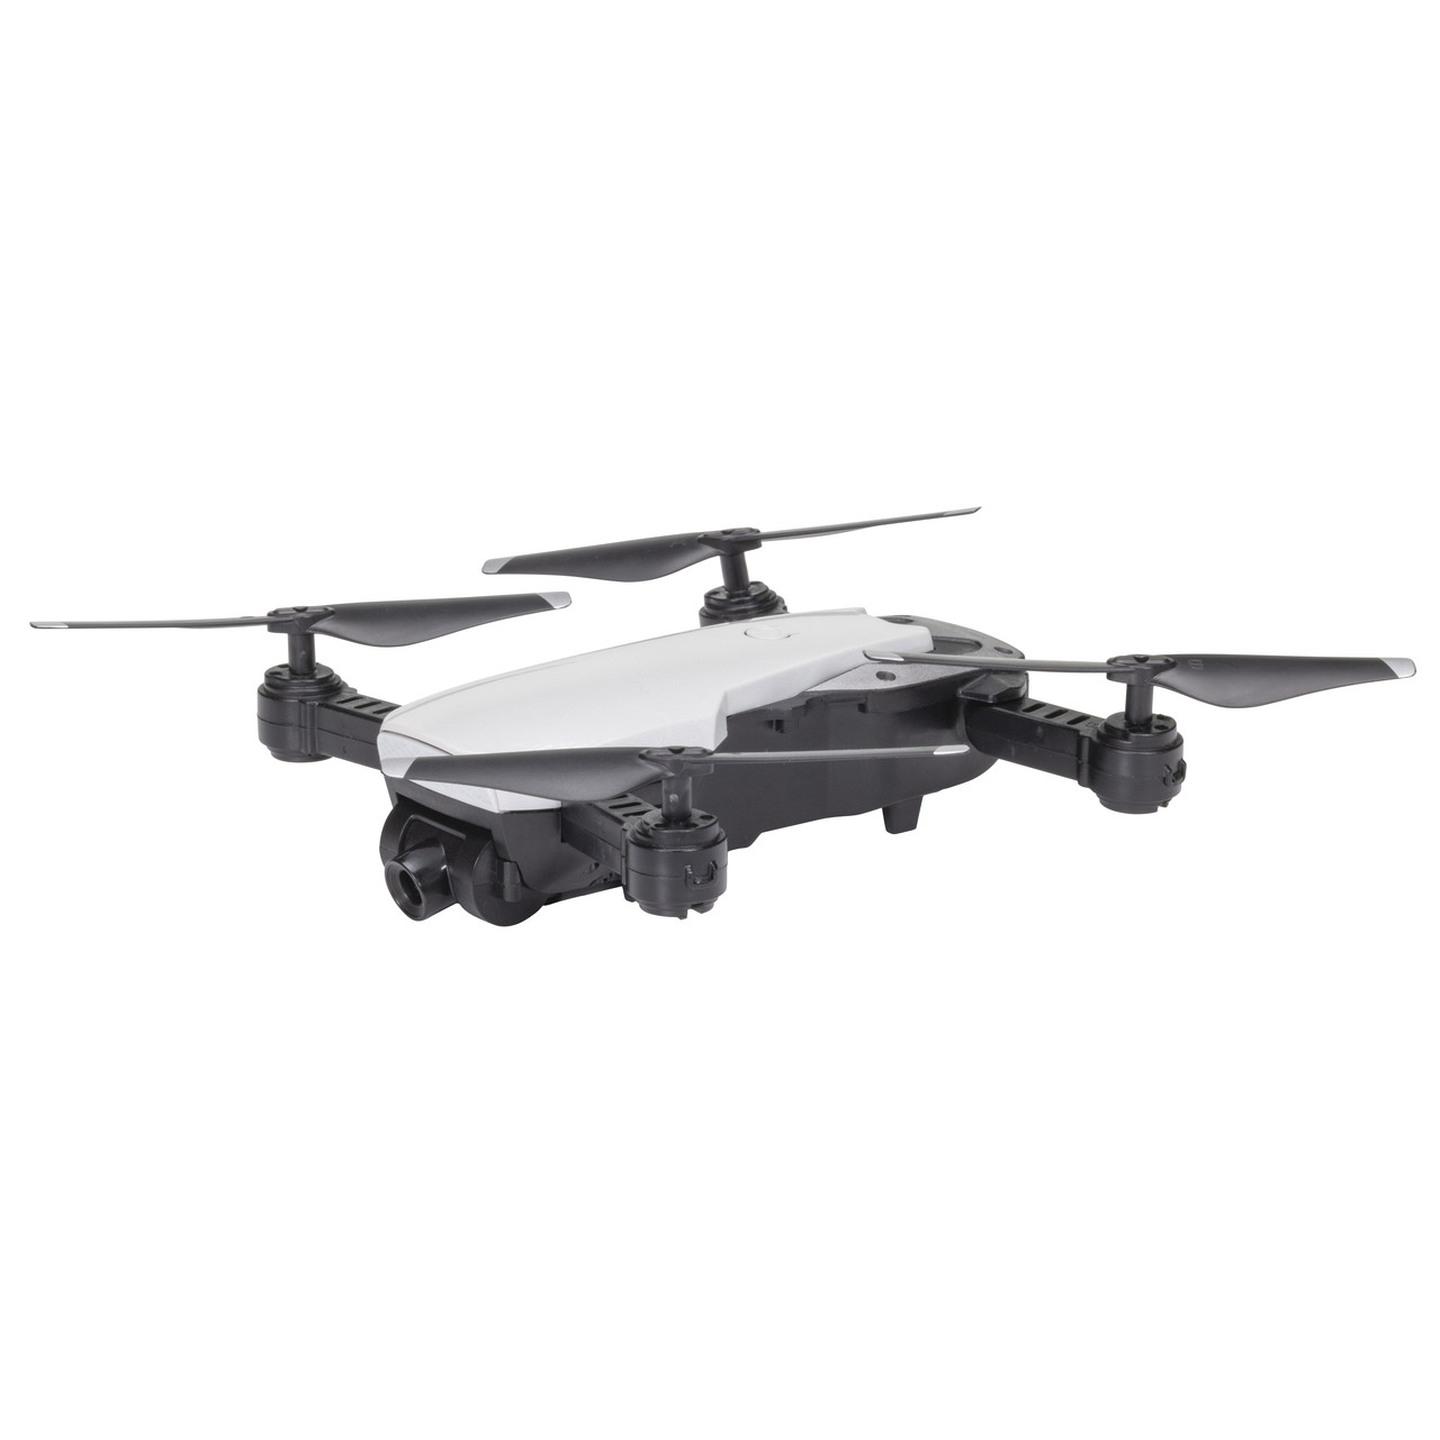 R/C FPV Drone with 1080p Camera